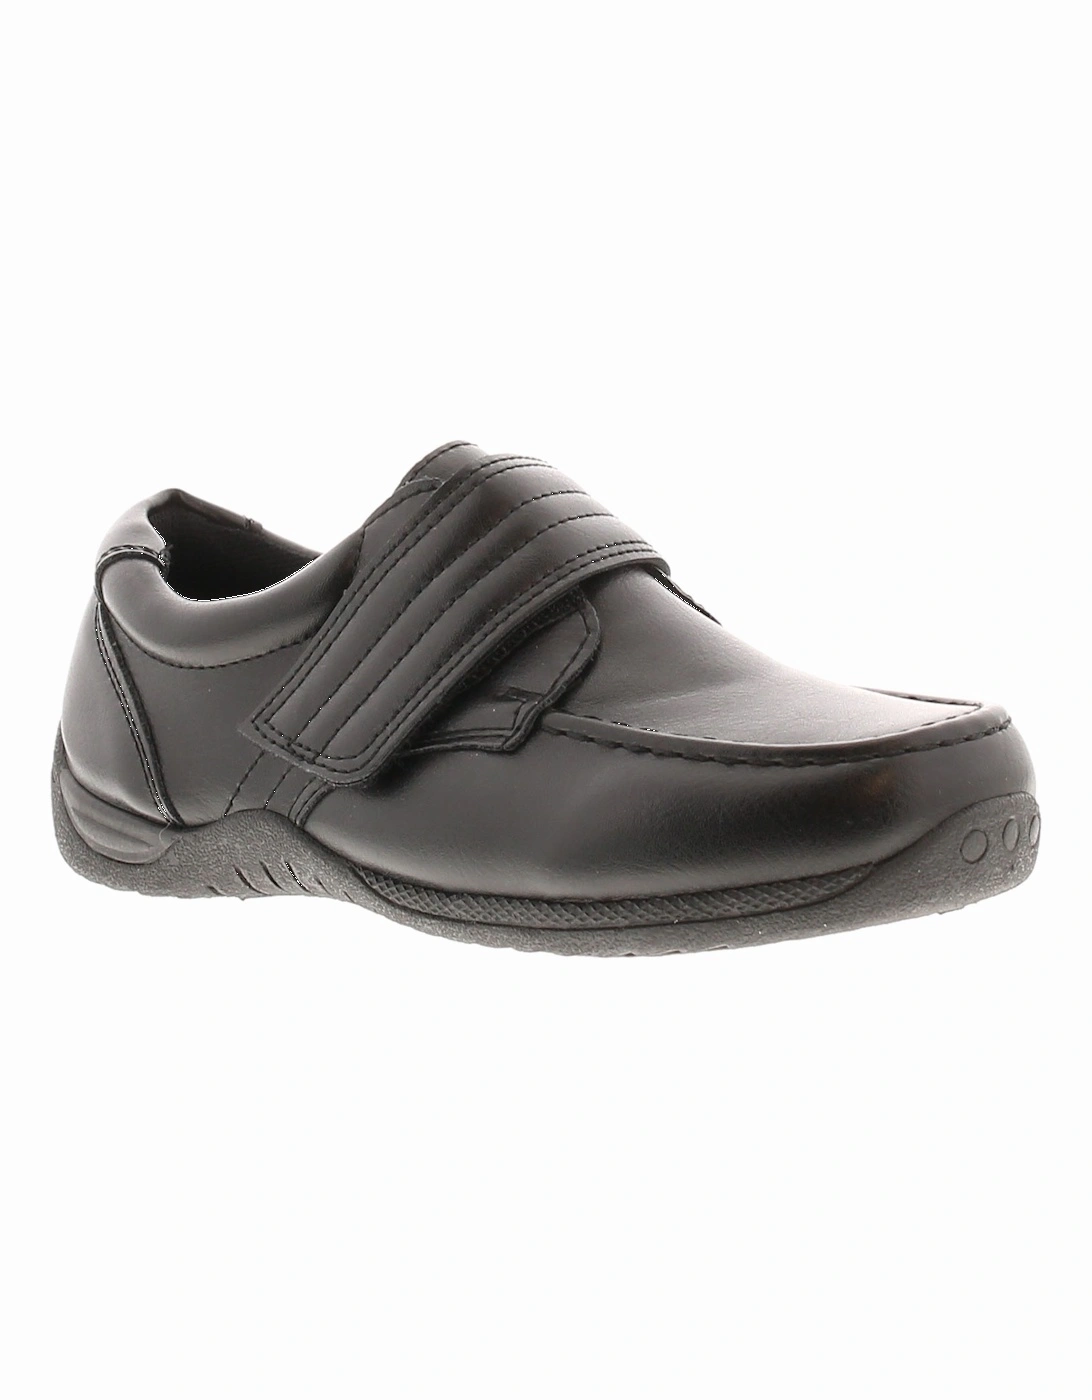 Boys Black School Shoes  Trainers kanye jnr black UK Size, 6 of 5